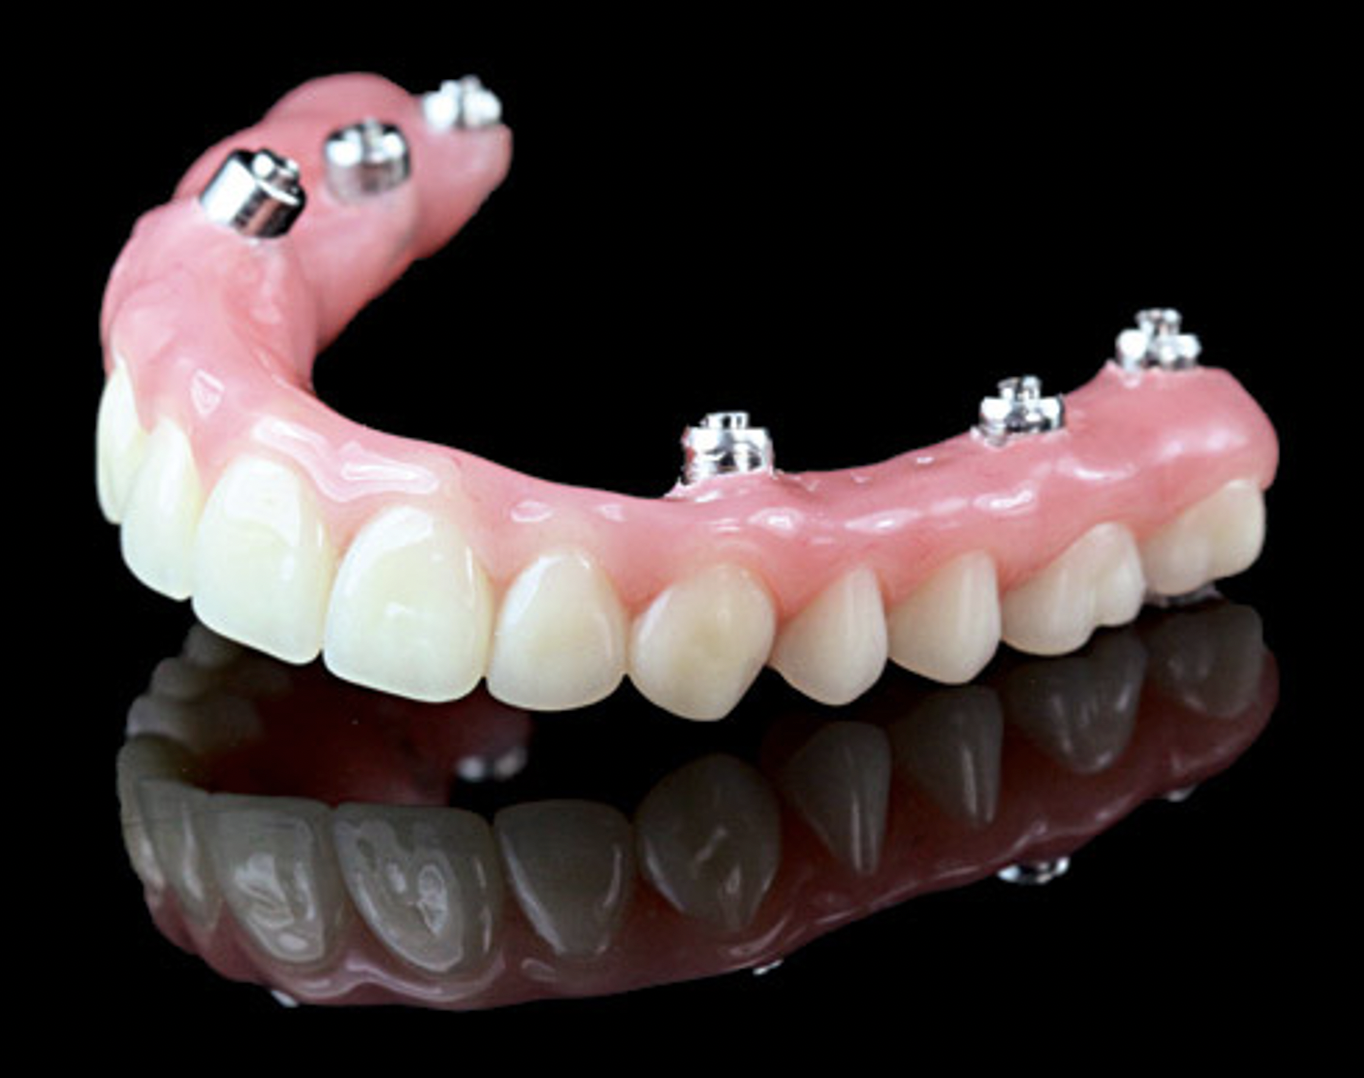 دندان مصنوعی ثابت چیست؟؟